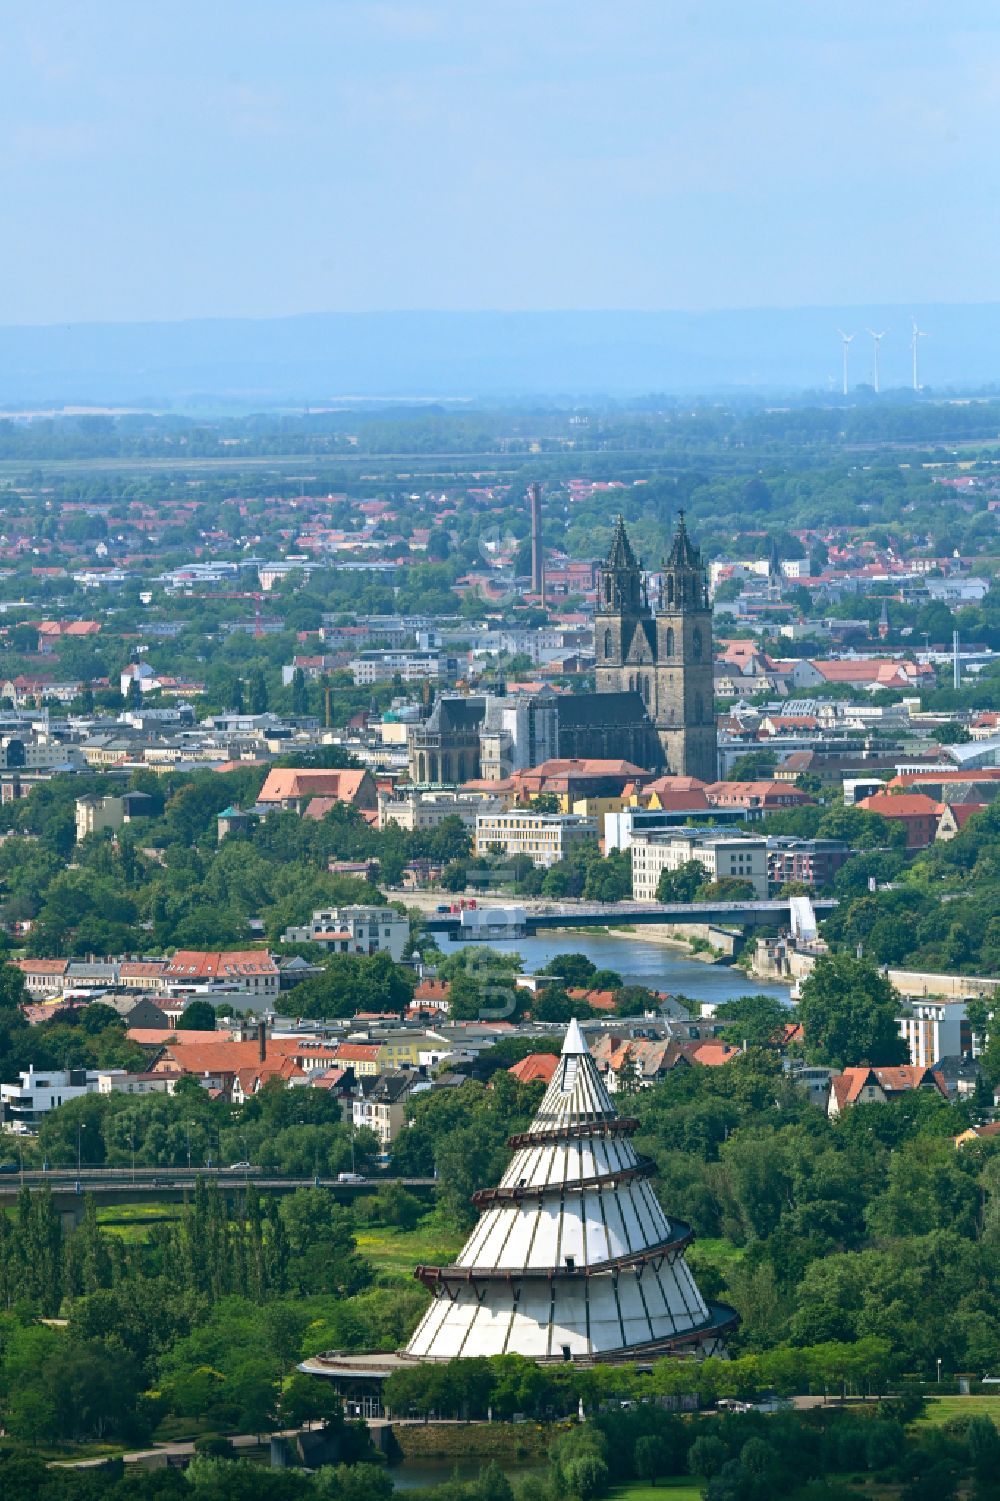 Luftbild Magdeburg - Aussichtsturm Jahrtausendturm Magdeburg im Ortsteil Herrenkrug in Magdeburg im Bundesland Sachsen-Anhalt, Deutschland